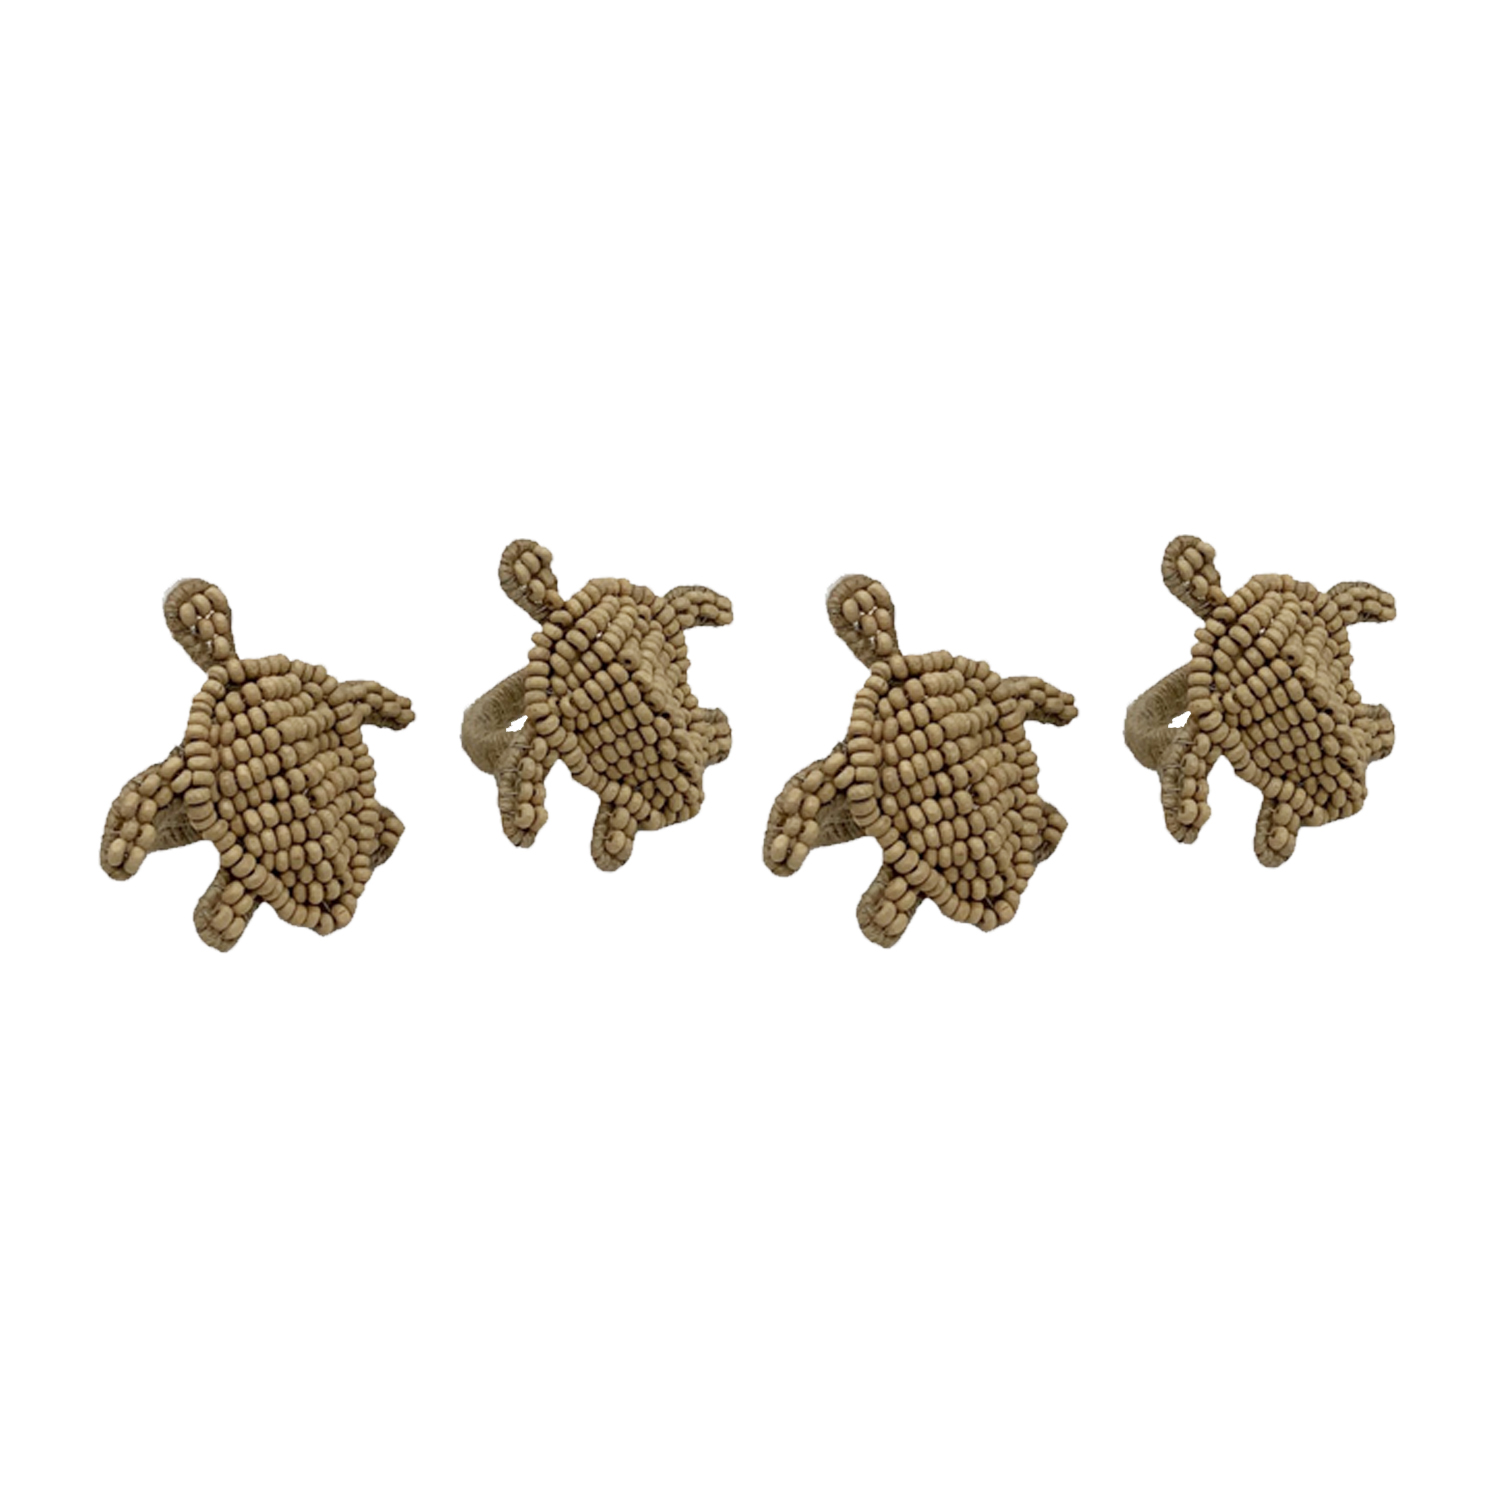 Turtle Napkin Ring Set/4 Gift